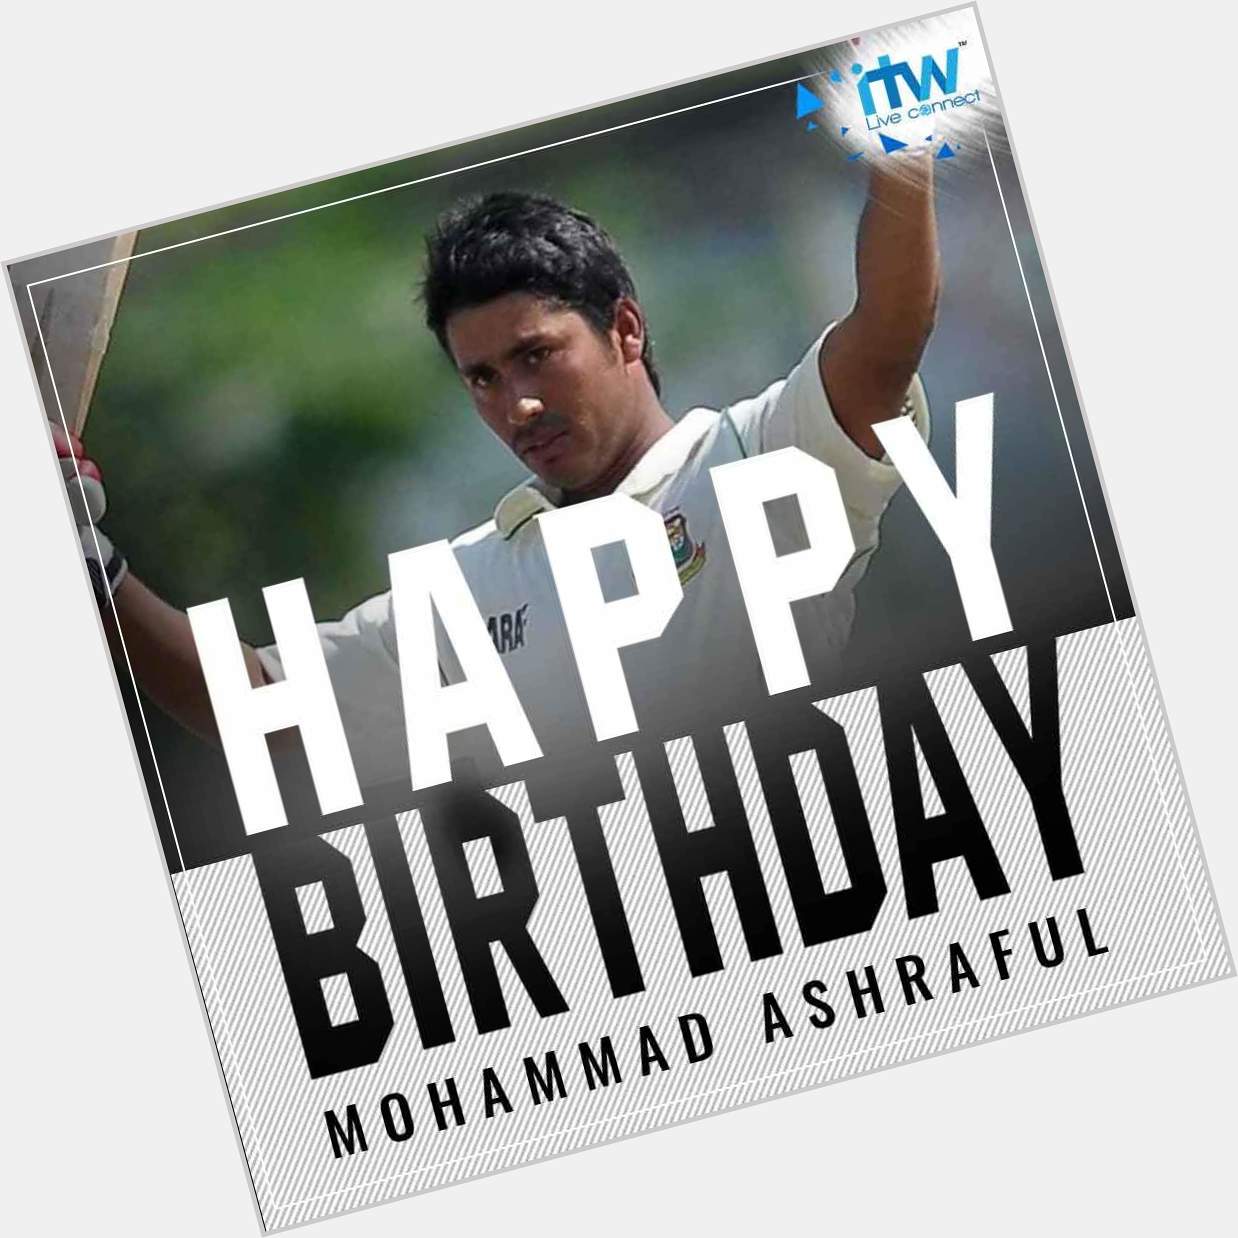 Wishing a very Happy Birthday to Bangladesh player Mohammad Ashraful.   